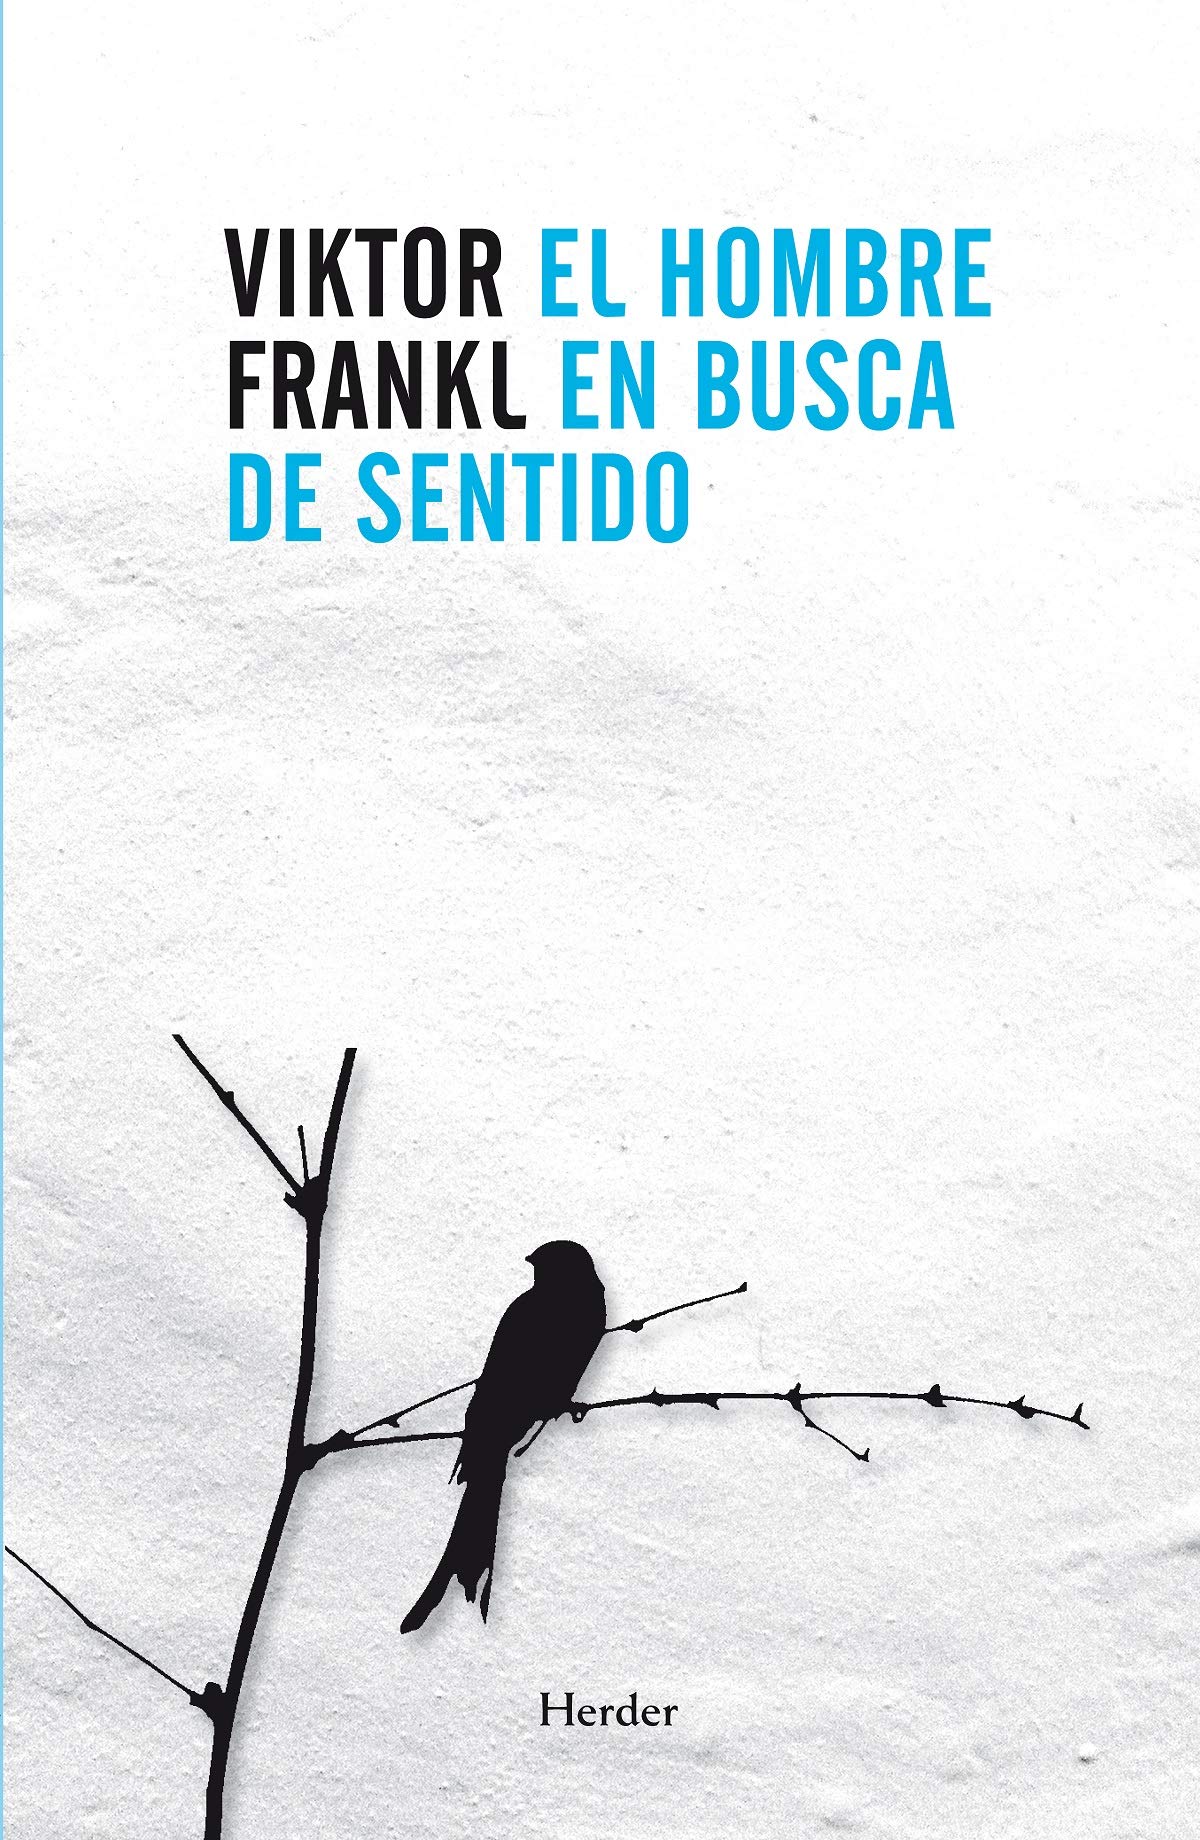 INVITACIÓN A LA LECTURA XXIX: EL HOMBRE EN BUSCA DE SENTIDO de VIKTOR EMIL FRANKL.